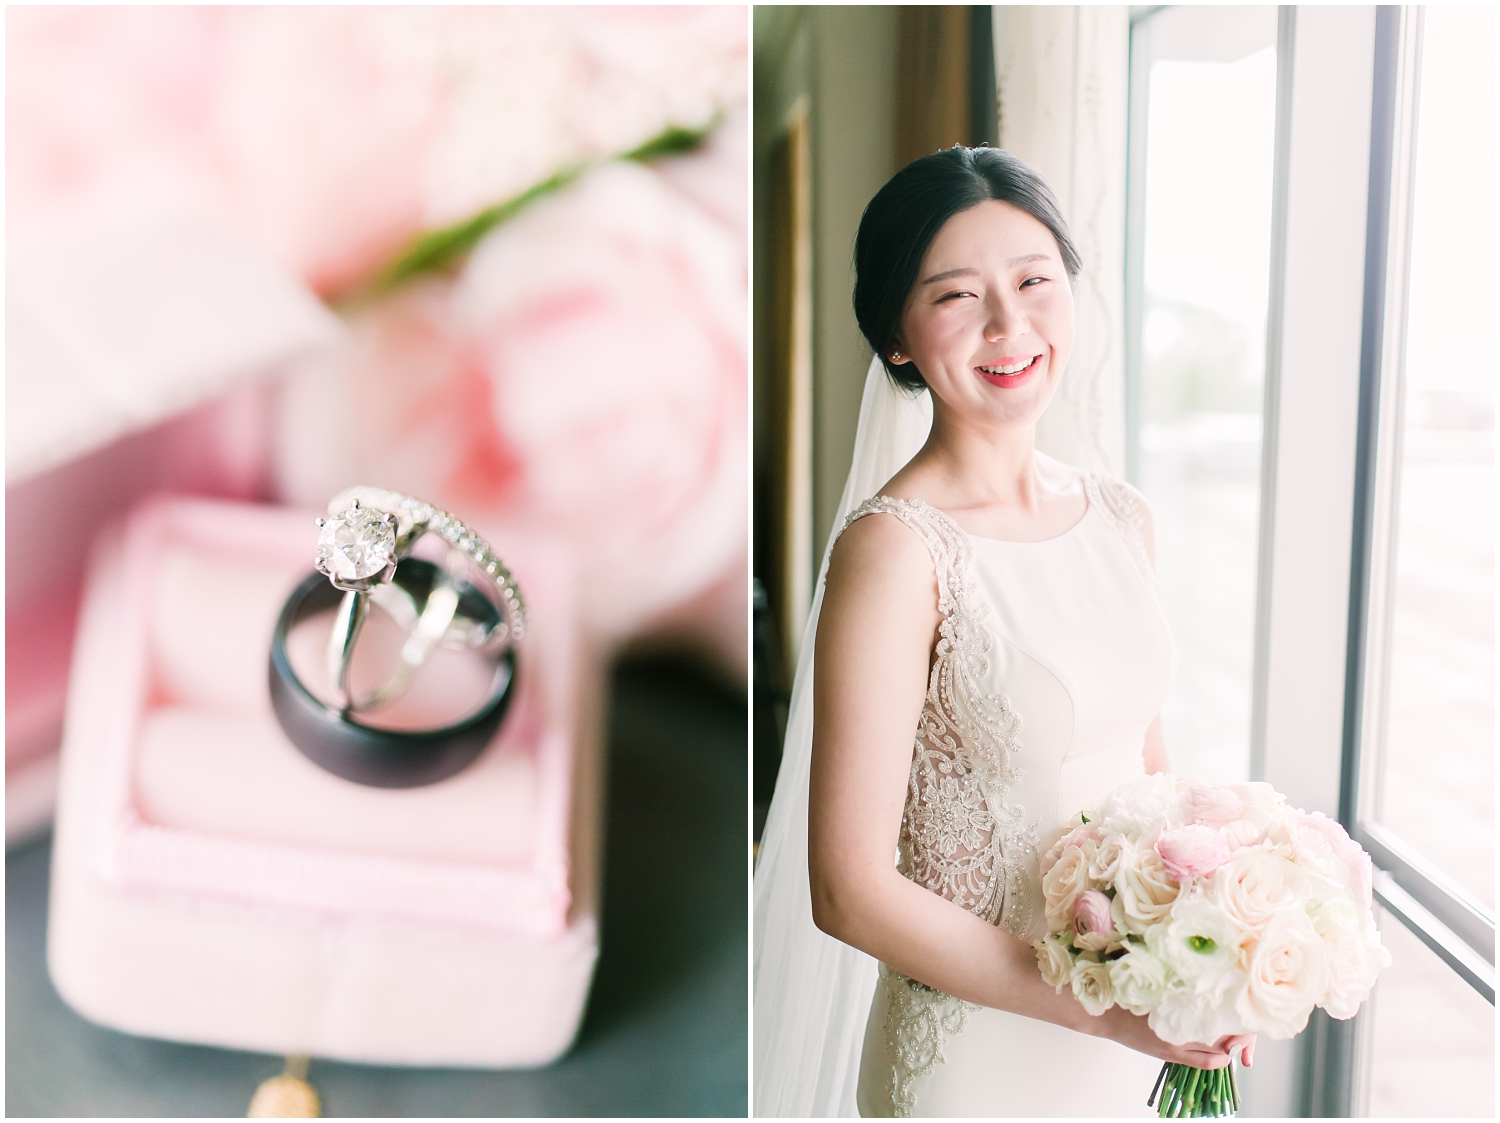 Seattle Marriott Waterfront Wedding | Minjae & Gayoung